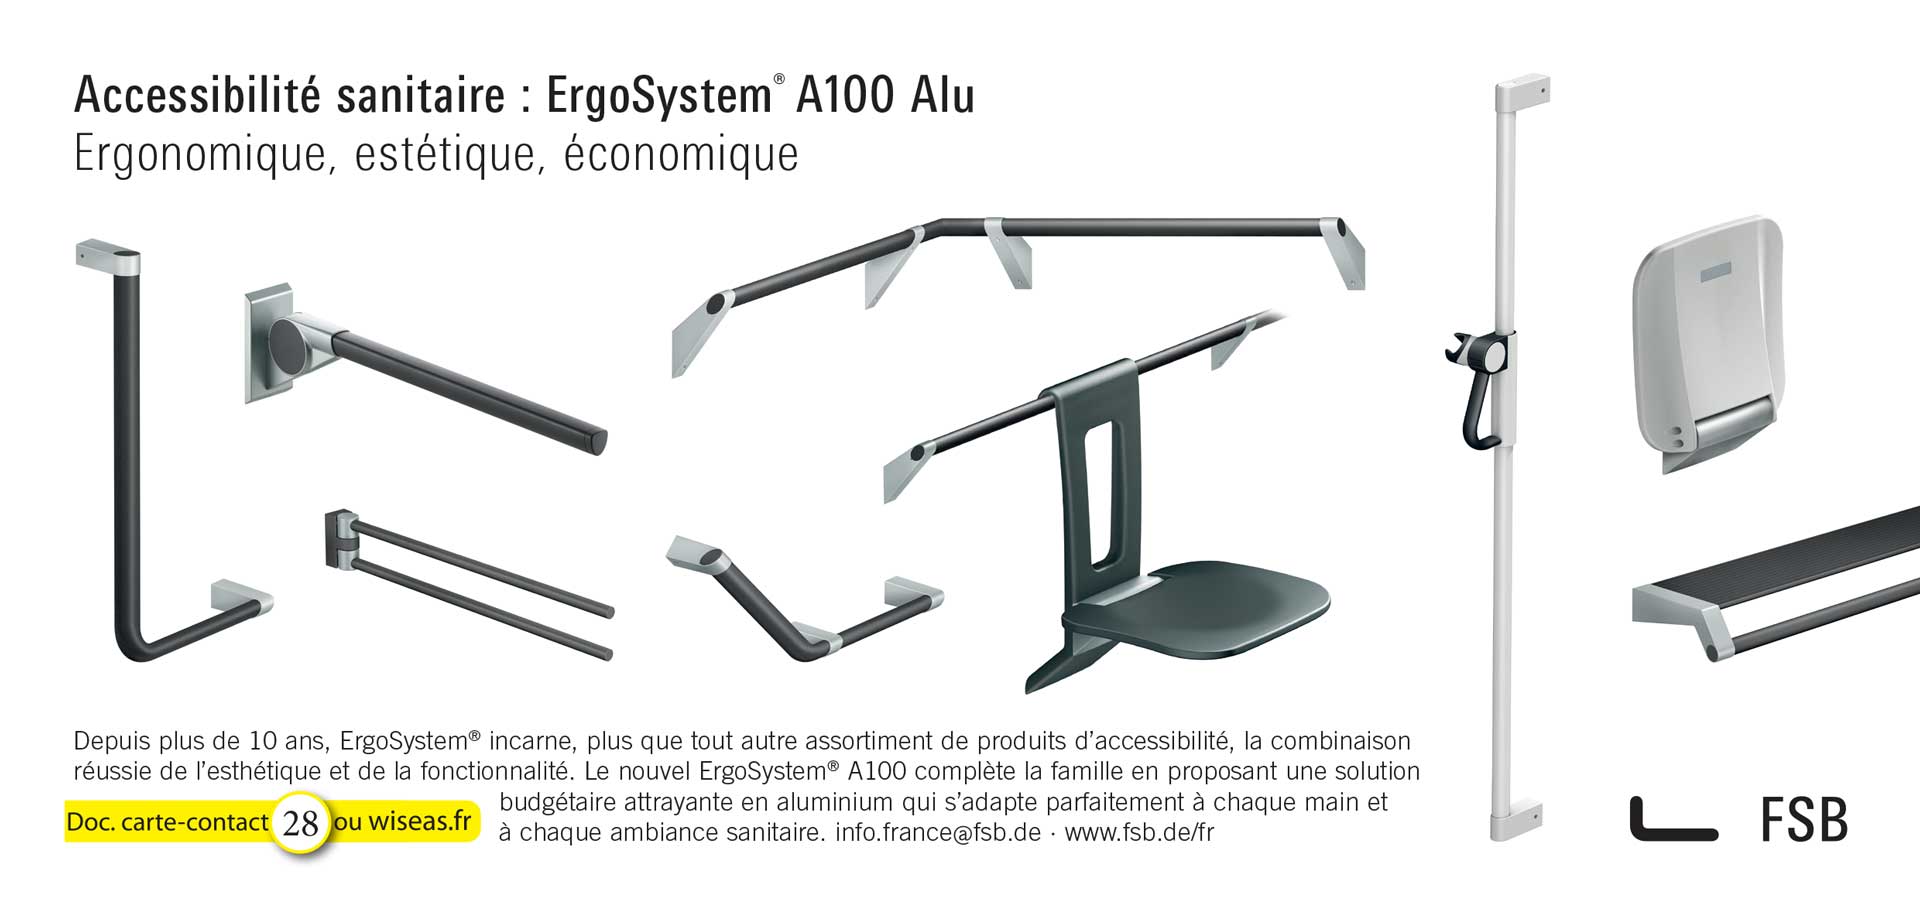 ErgoSystem A100 Alu